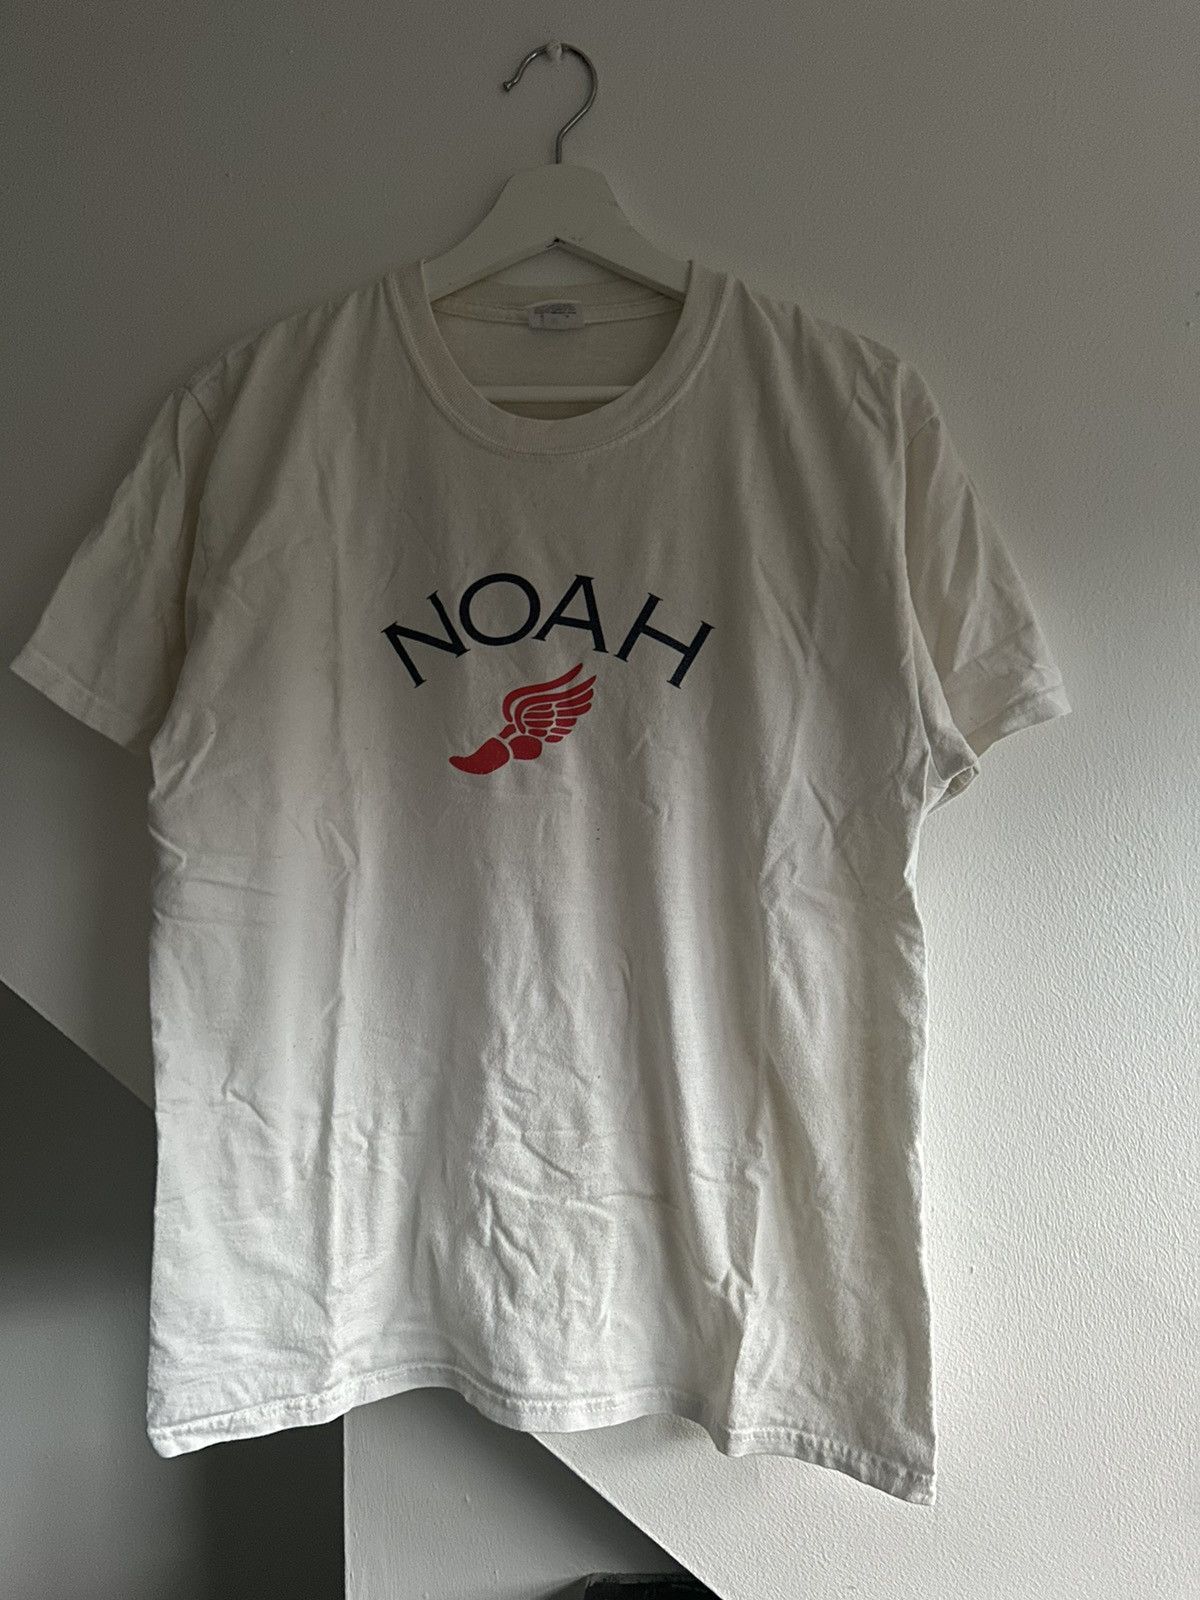 Noah Noah winged foot tee | Grailed